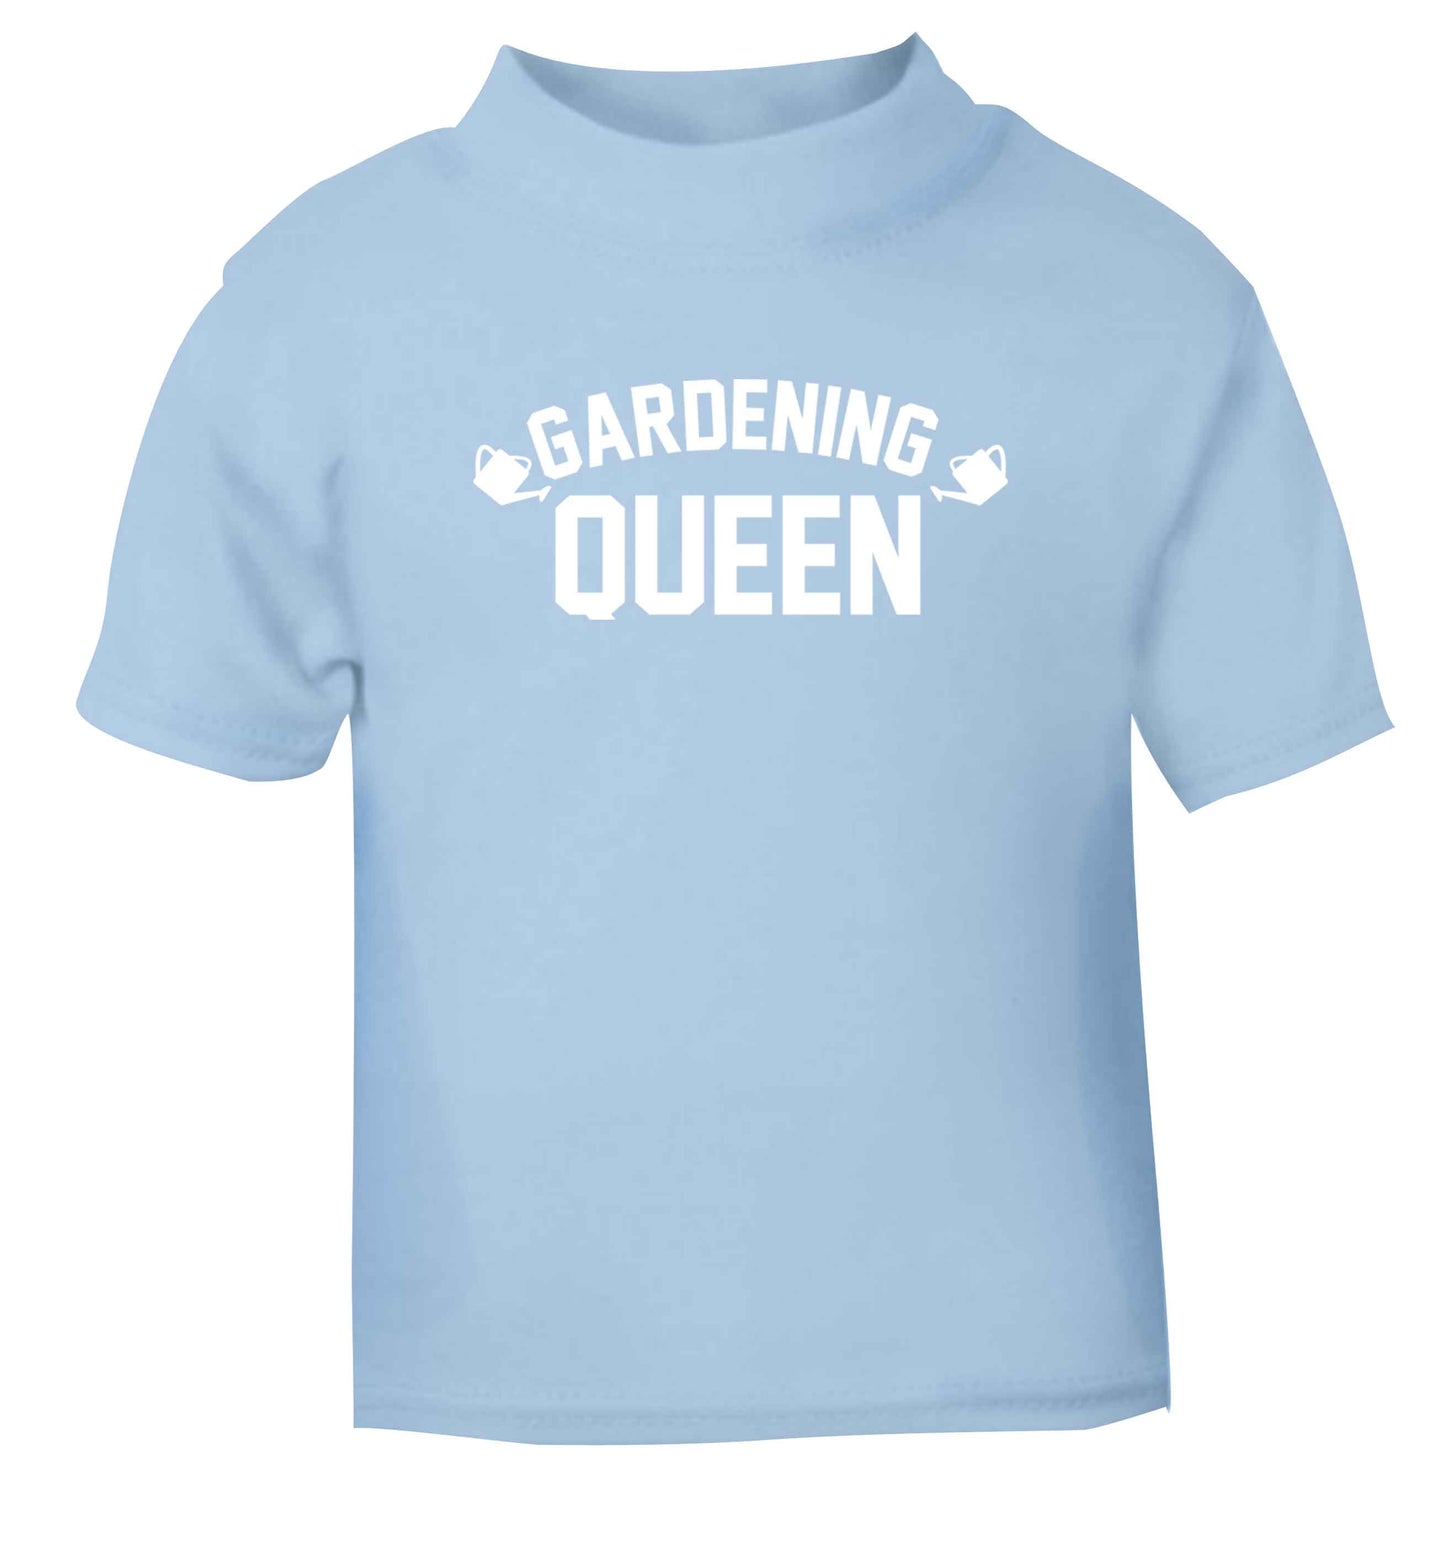 Gardening queen light blue Baby Toddler Tshirt 2 Years